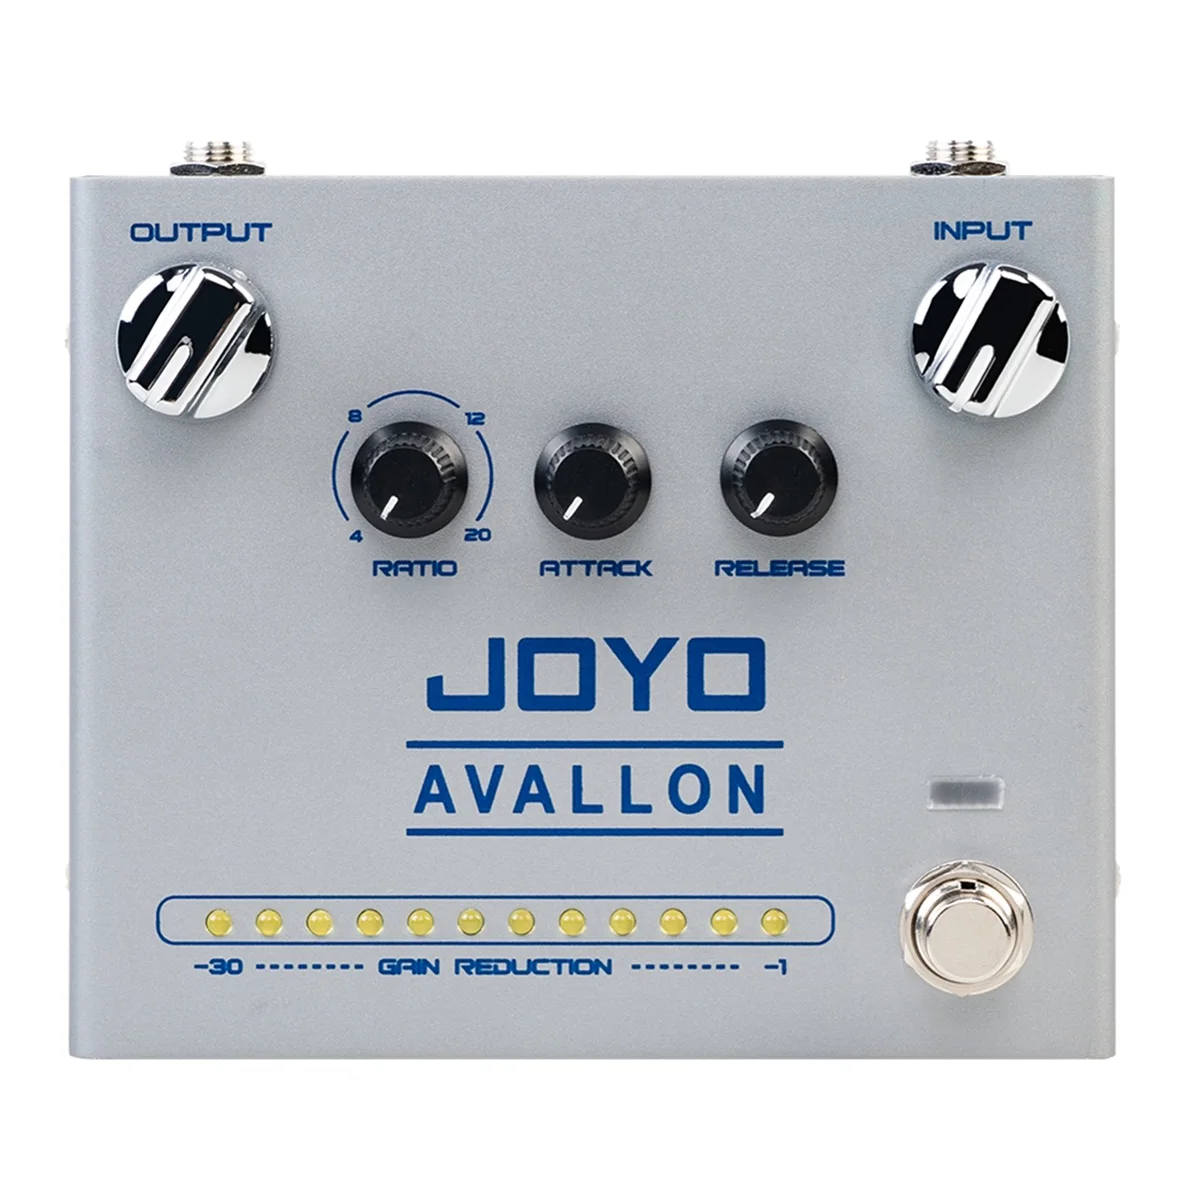 

JOYO R-19 AVALLON Guitar Pedal Classic Compressor Effect Pedal 3 Knobs Ratio Attack Release for Guitar Bass